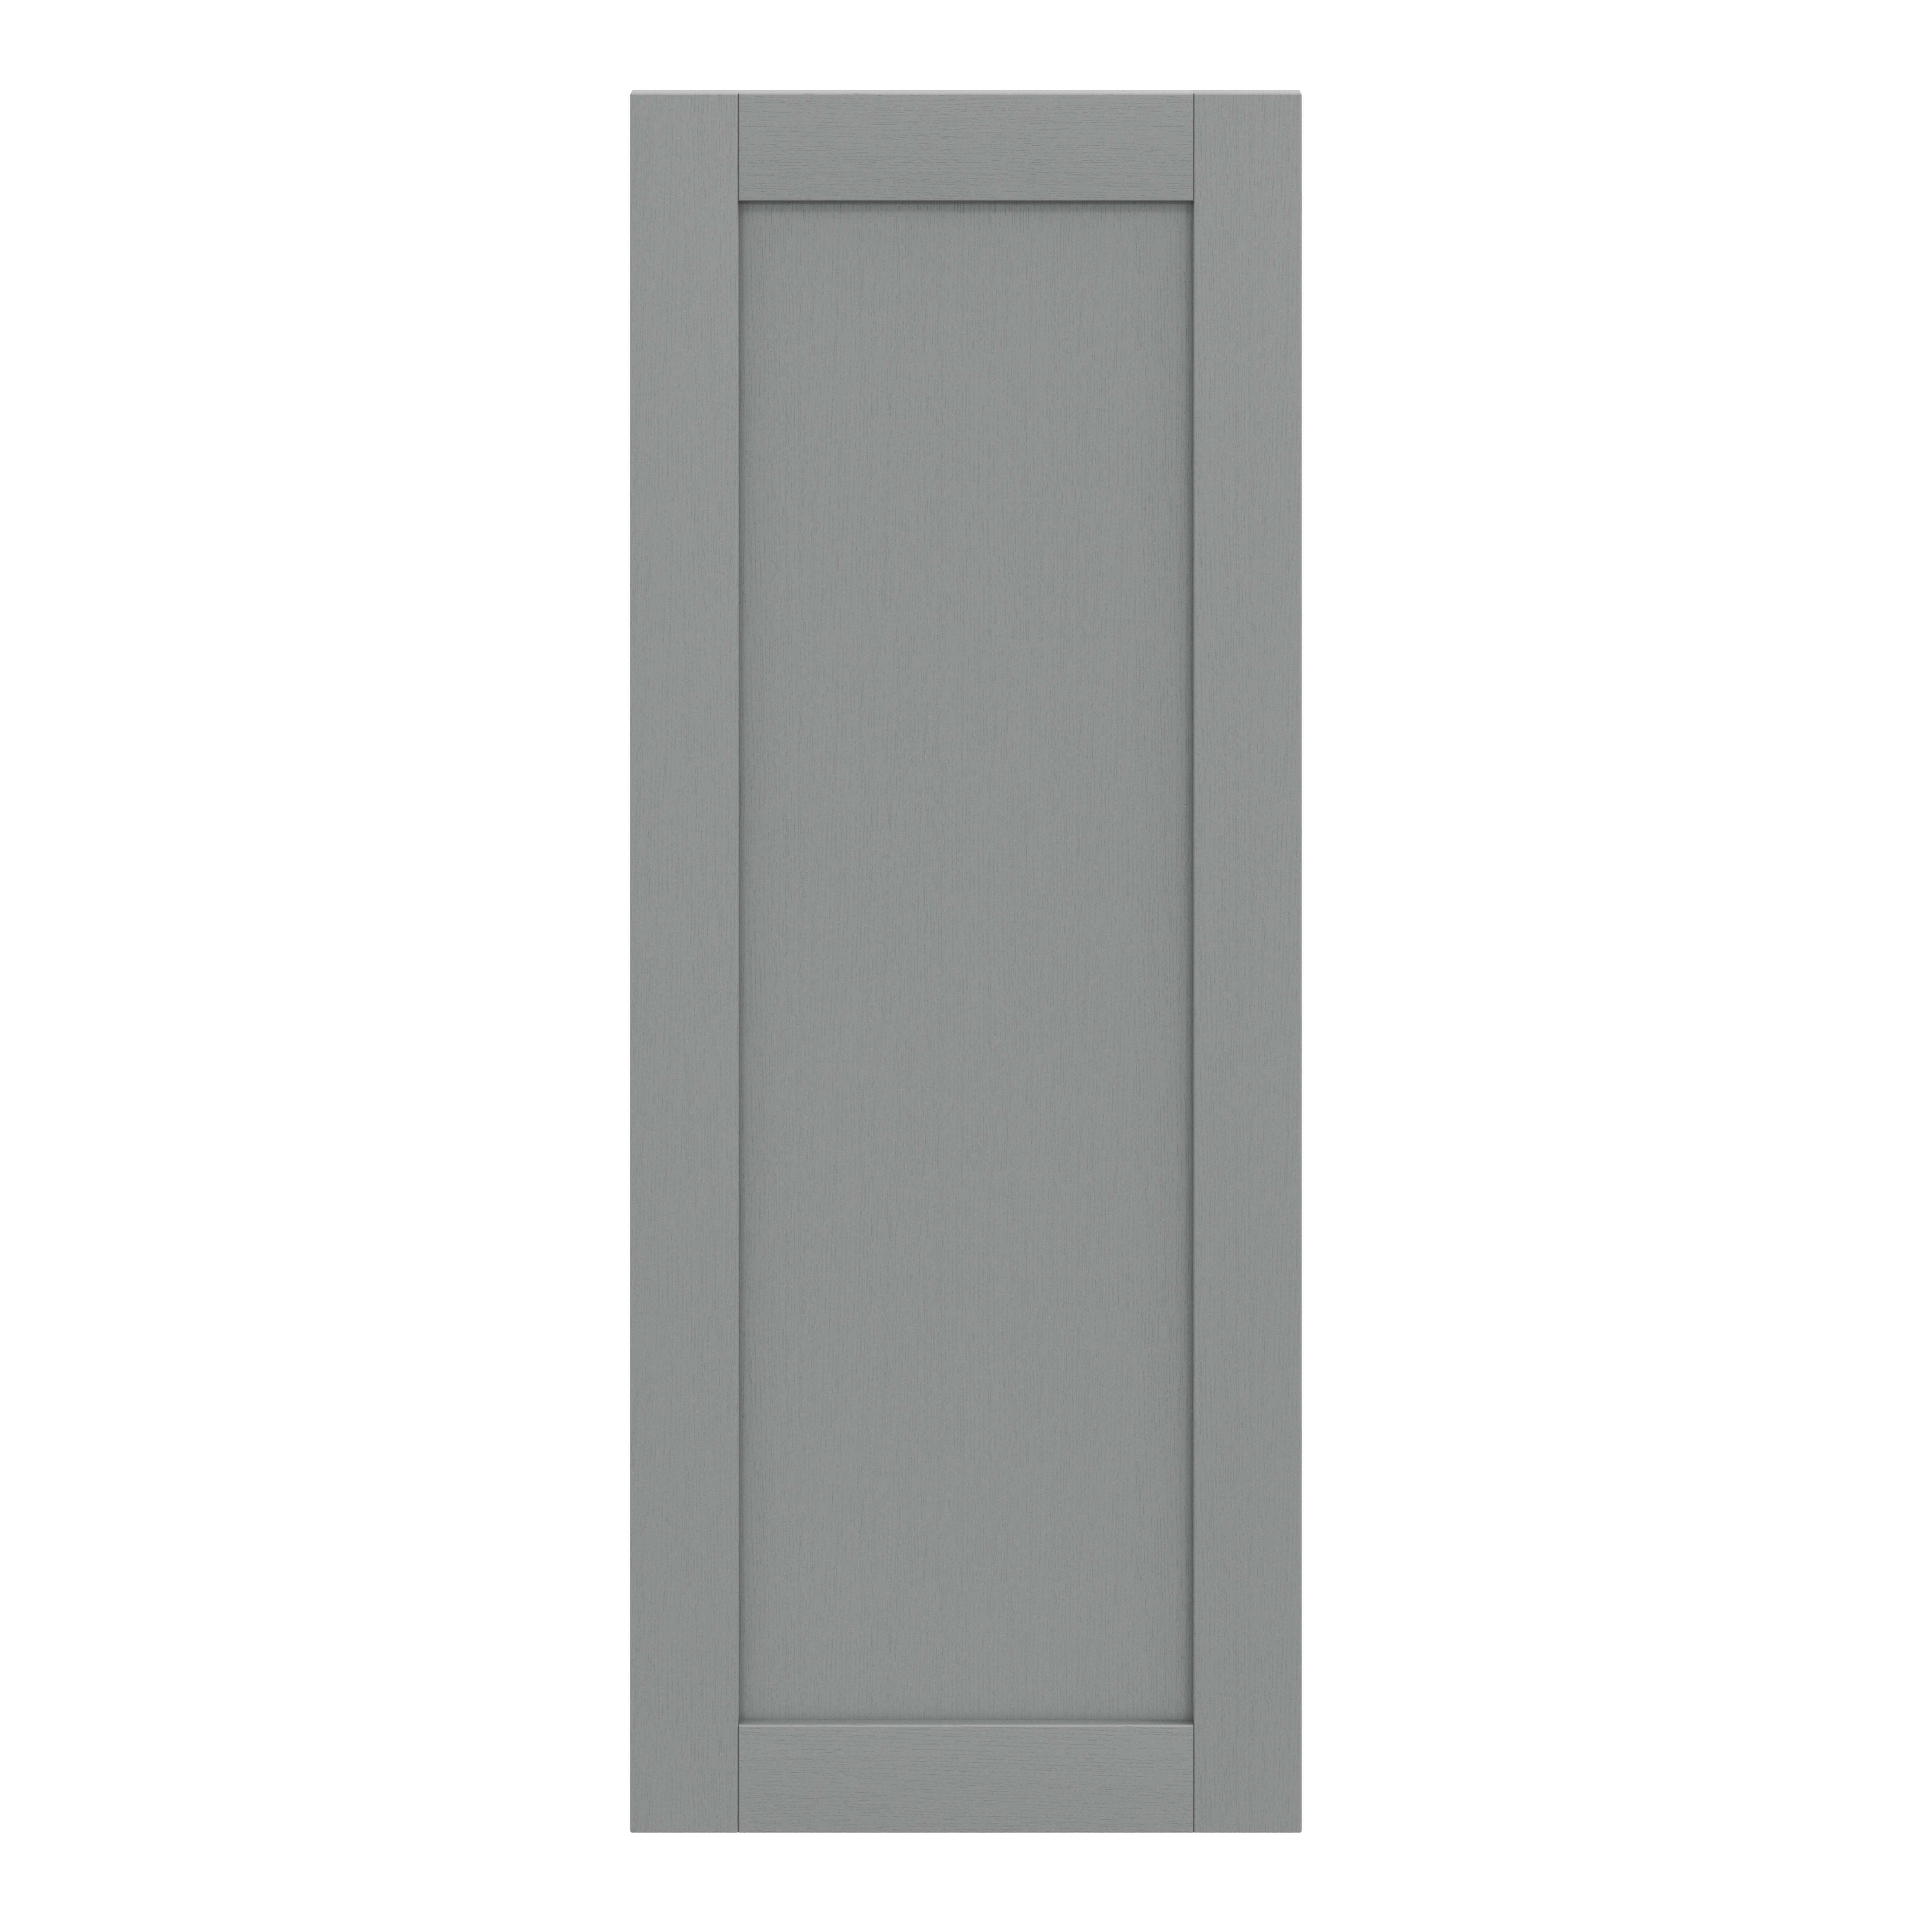 GoodHome Alpinia Matt Slate Grey Painted Wood Effect Shaker Larder Cabinet door (W)500mm (H)1287mm (T)18mm